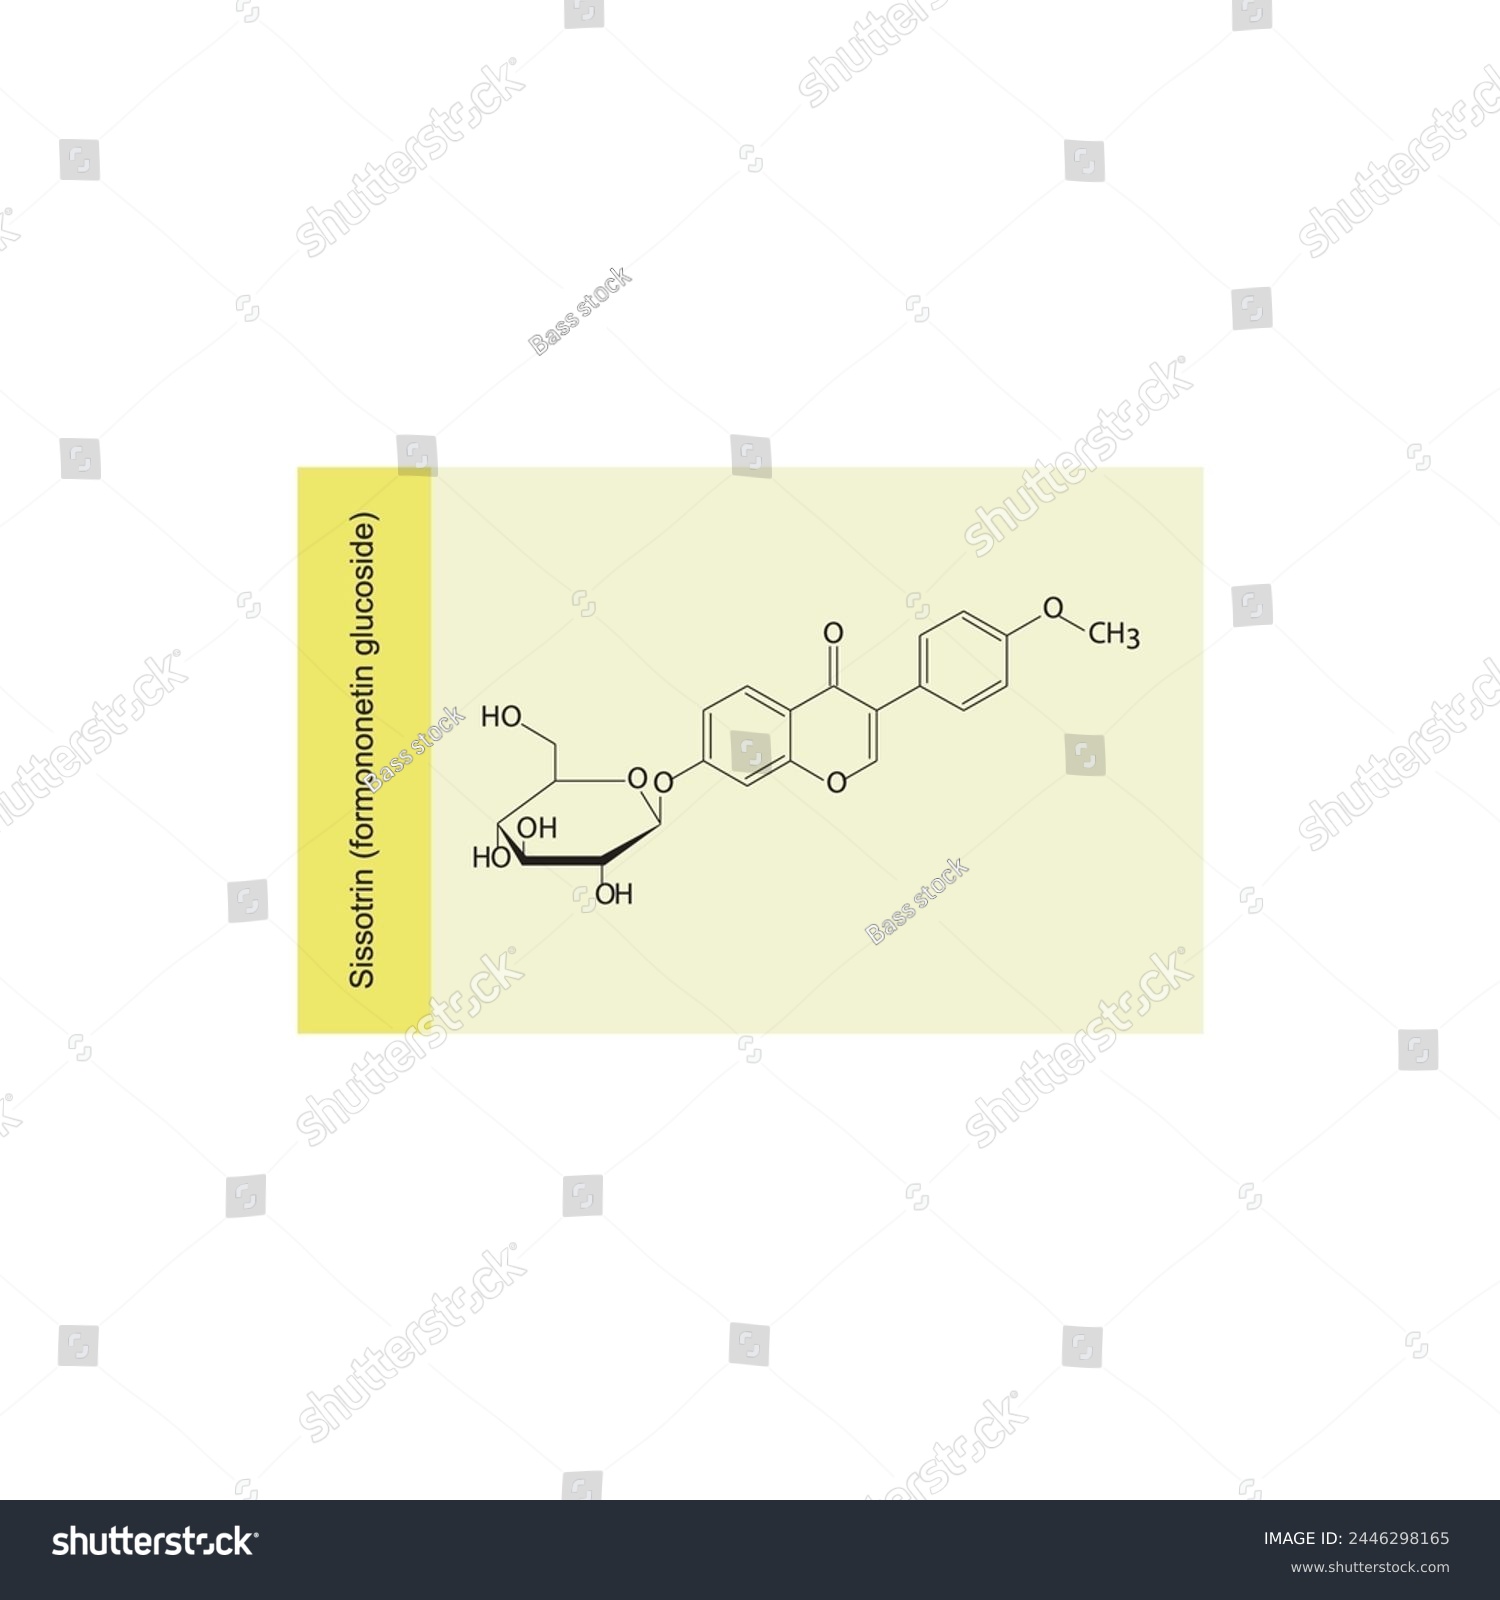 SVG of Sissotrin (formononetin glucoside) skeletal structure diagram.Isoflavanone compound molecule scientific illustration on yellow background. svg